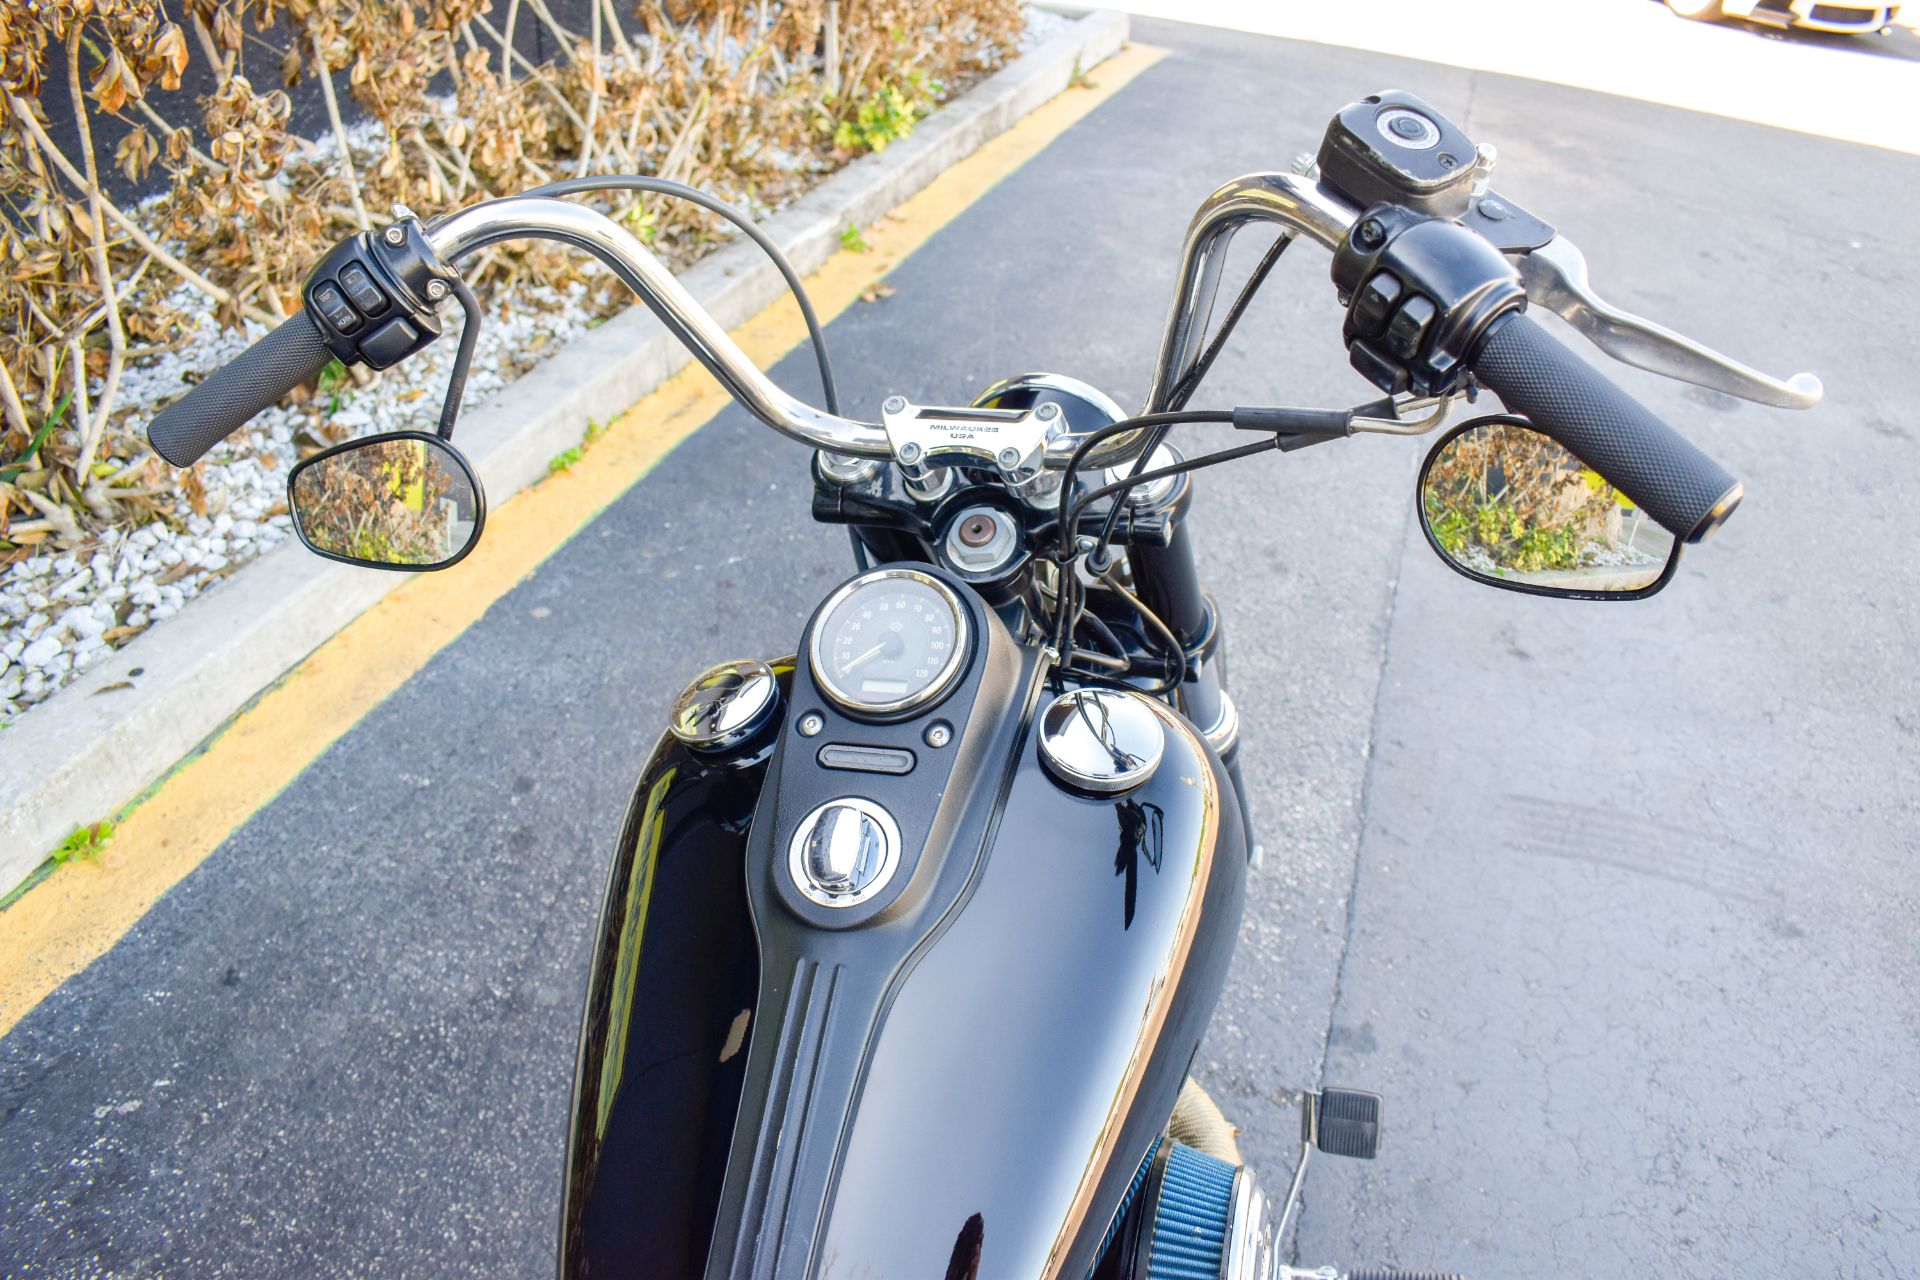 2014 Harley-Davidson Dyna® Street Bob® in Jacksonville, Florida - Photo 10